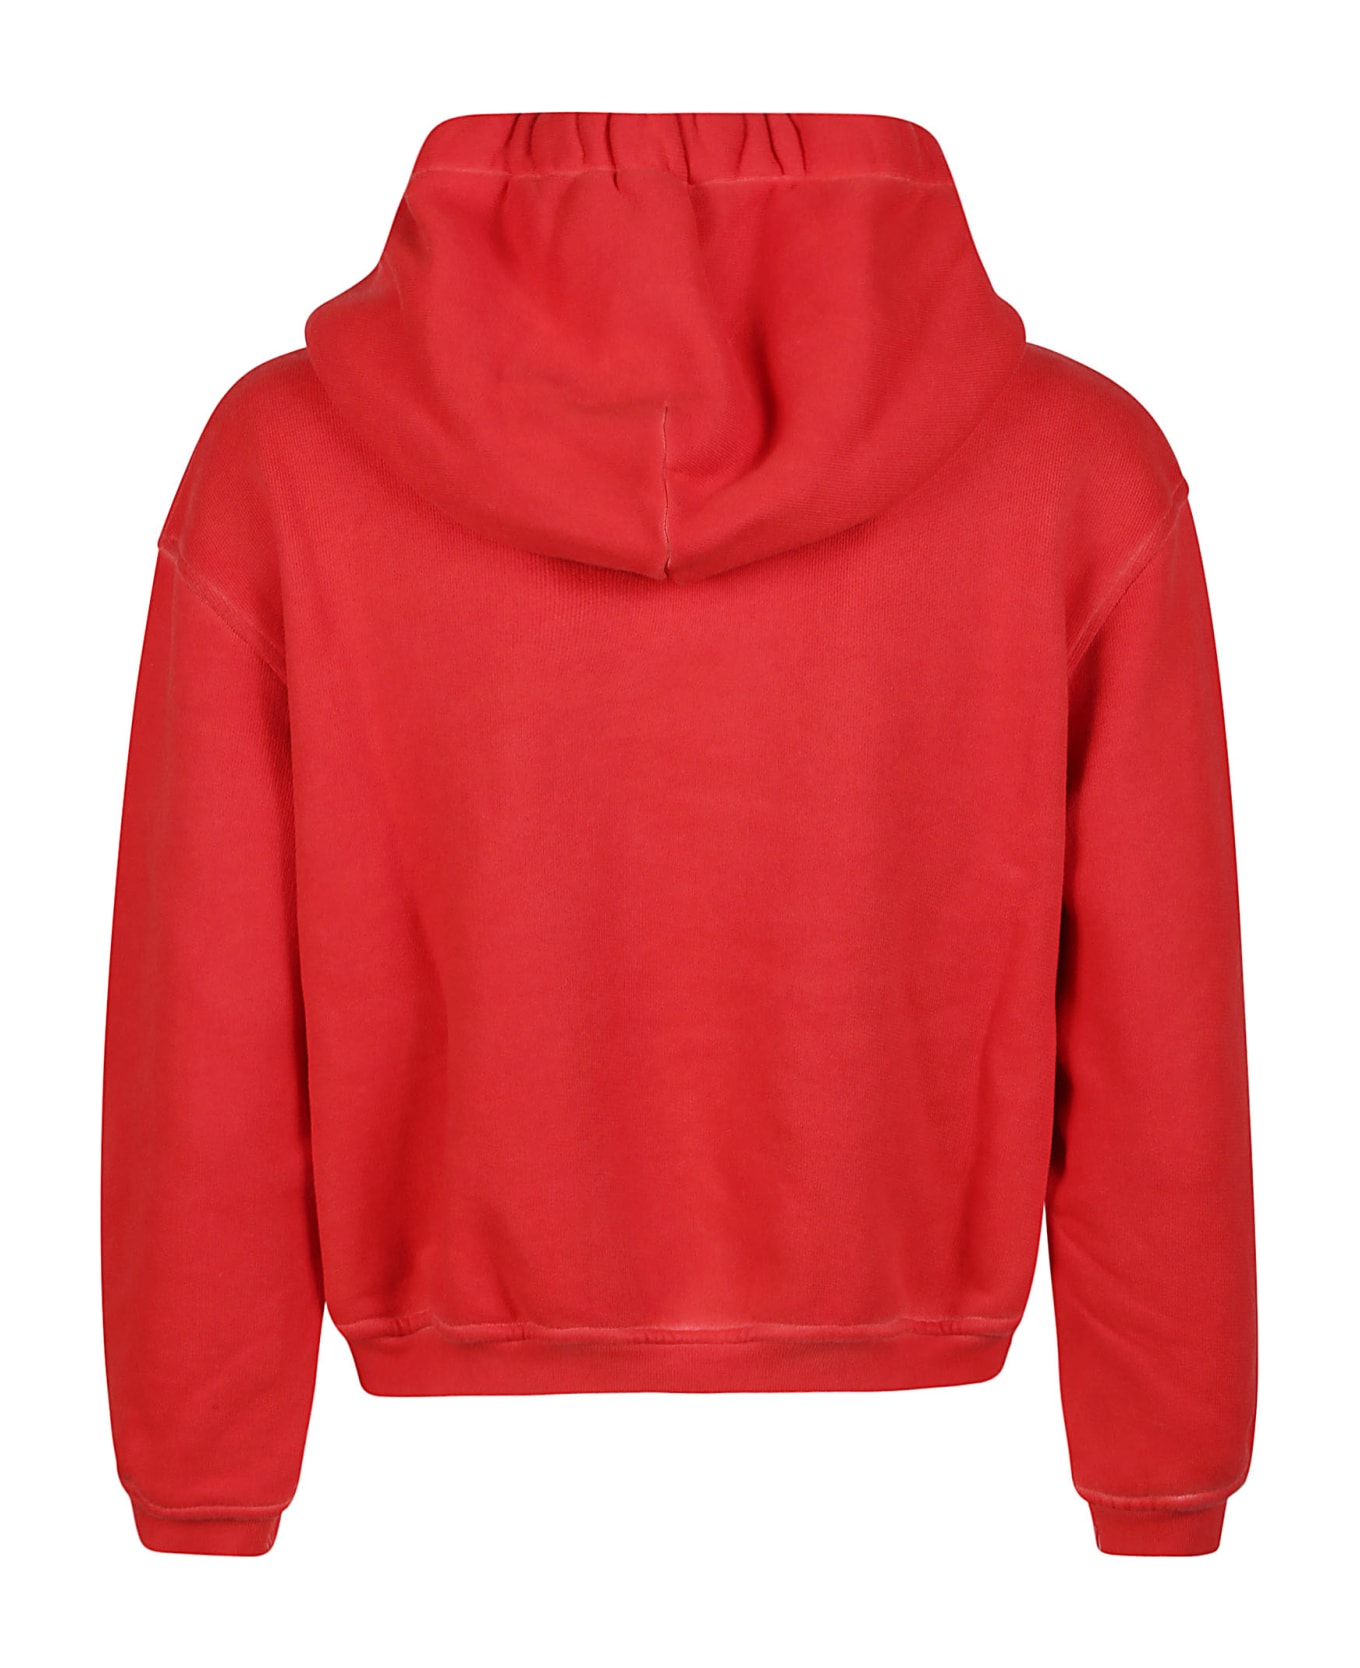 Alexander Wang Glitter Puff Logo Bi-color Shrunken Sweatshirt - A Fiery Red Combo